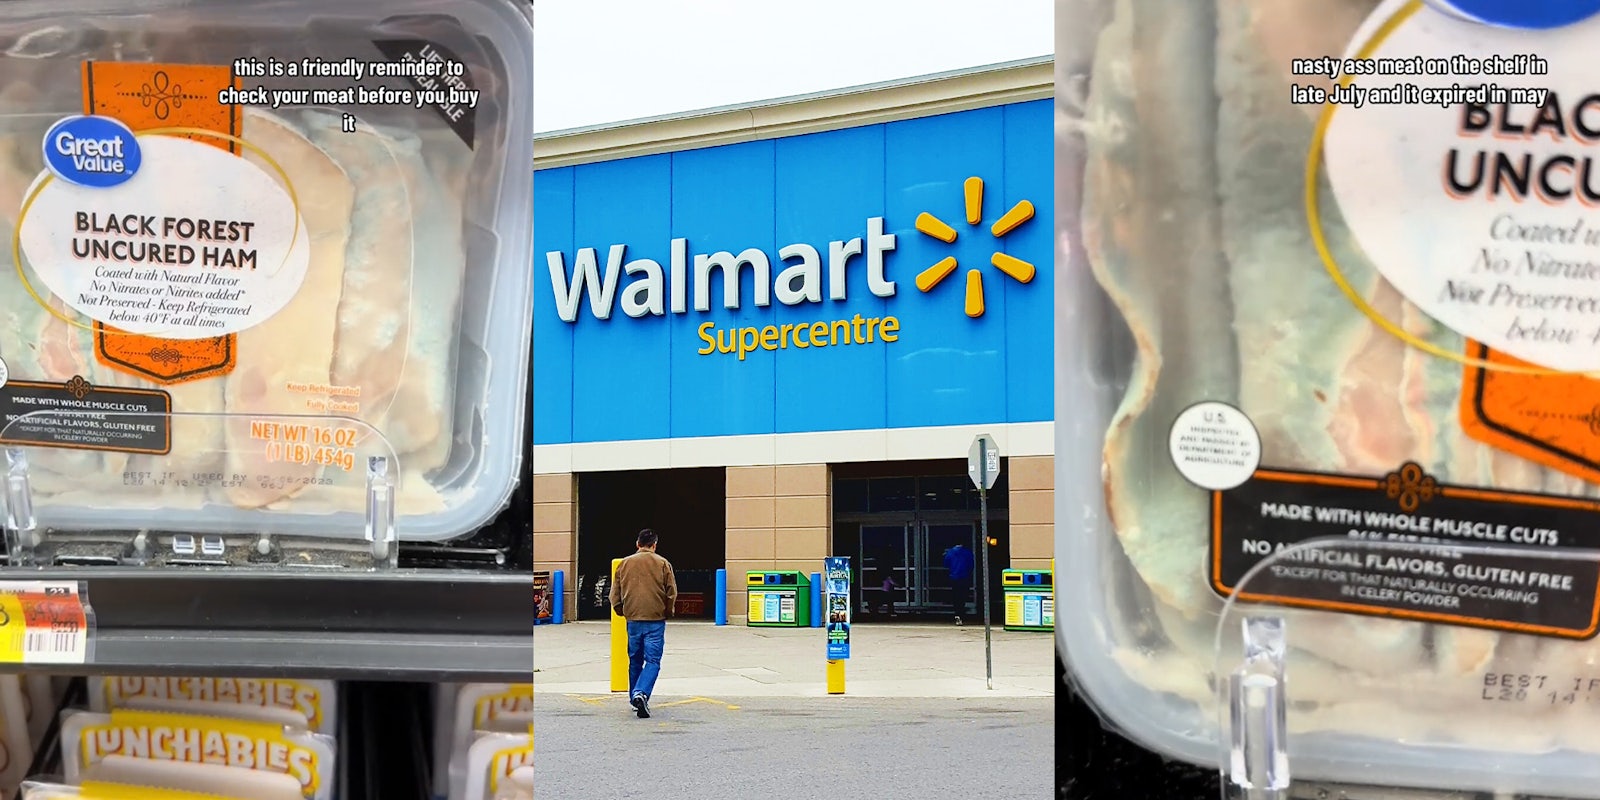 Customer Exposes Expired, Moldy Ham at Walmart